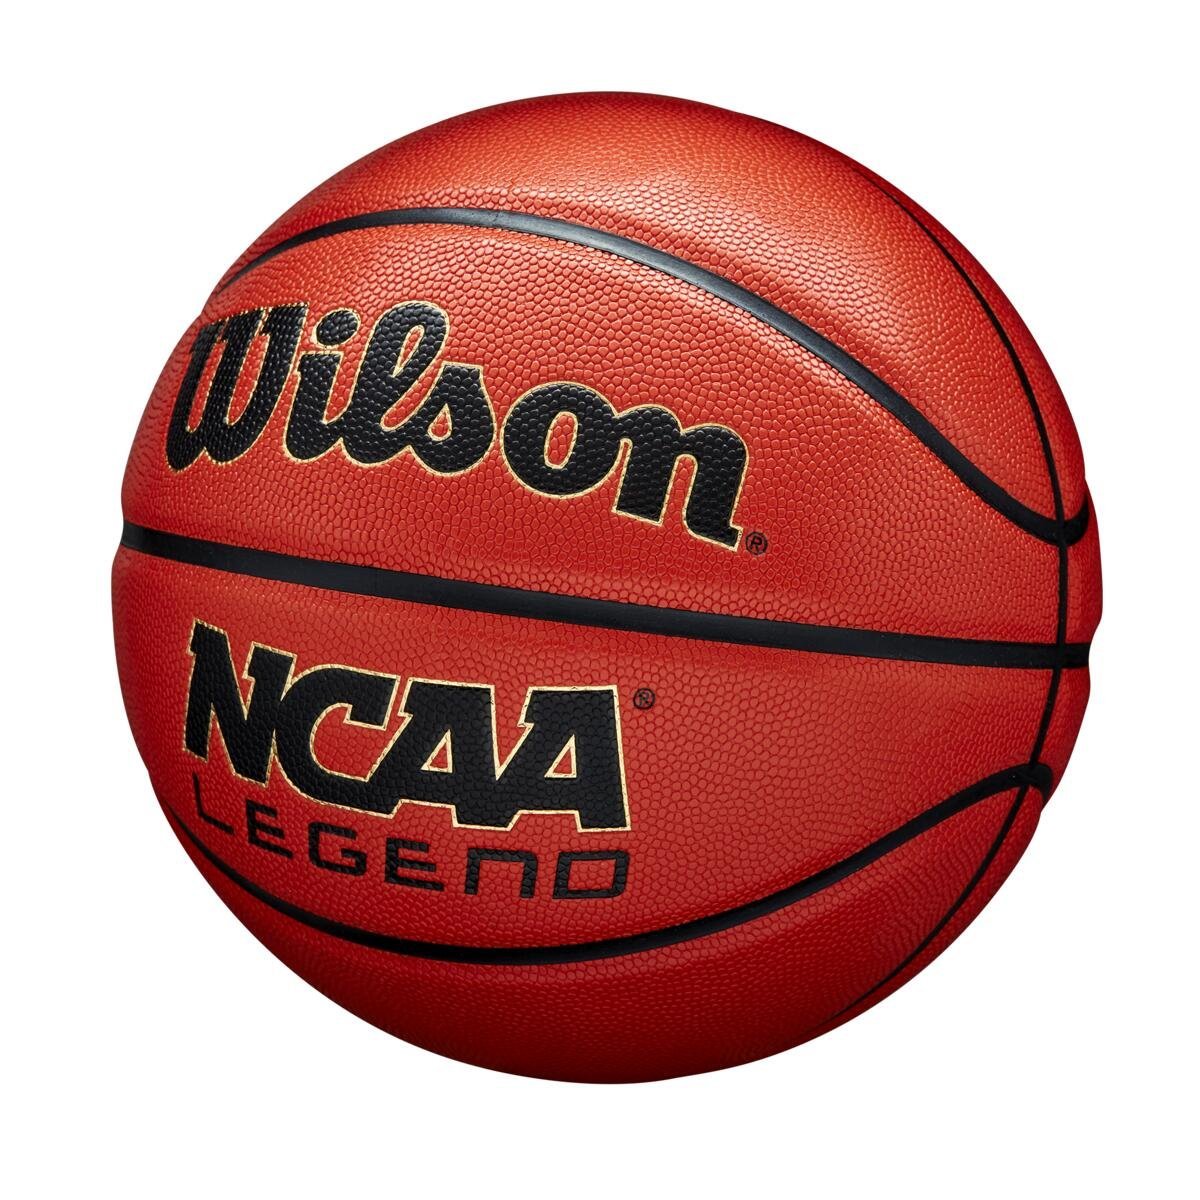 Lopta Wilson NCAA Legend Bskt - oranžová